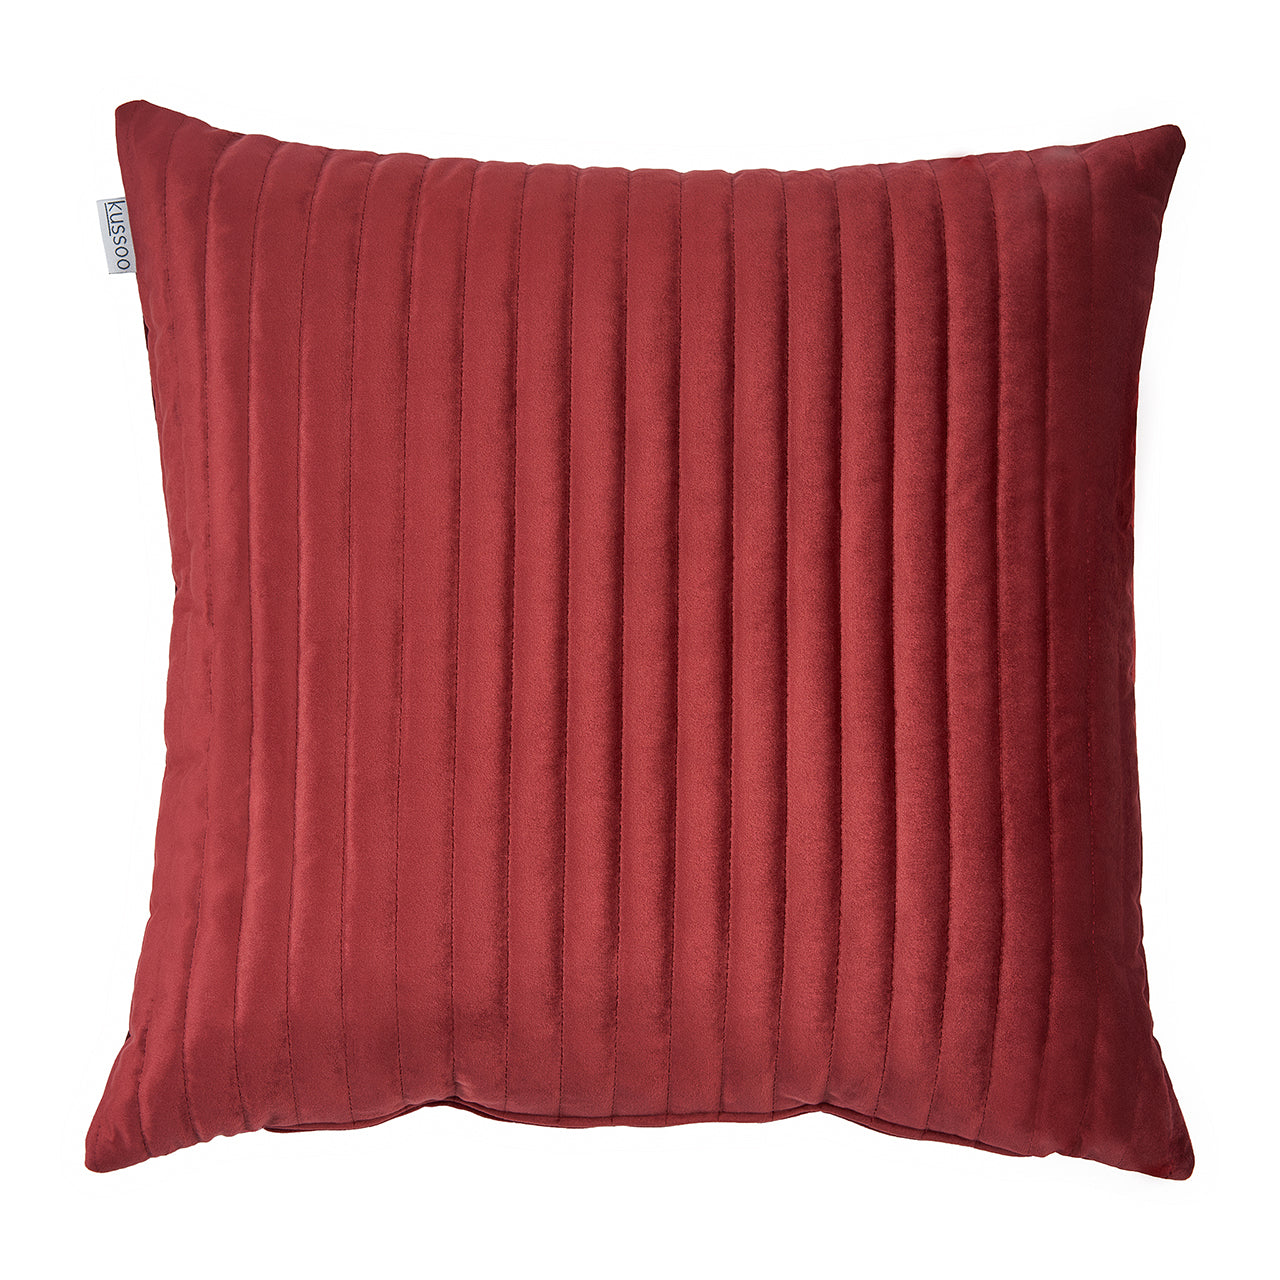 Kussen-fluweel-streep-bordeaux-rood-50x50-cm